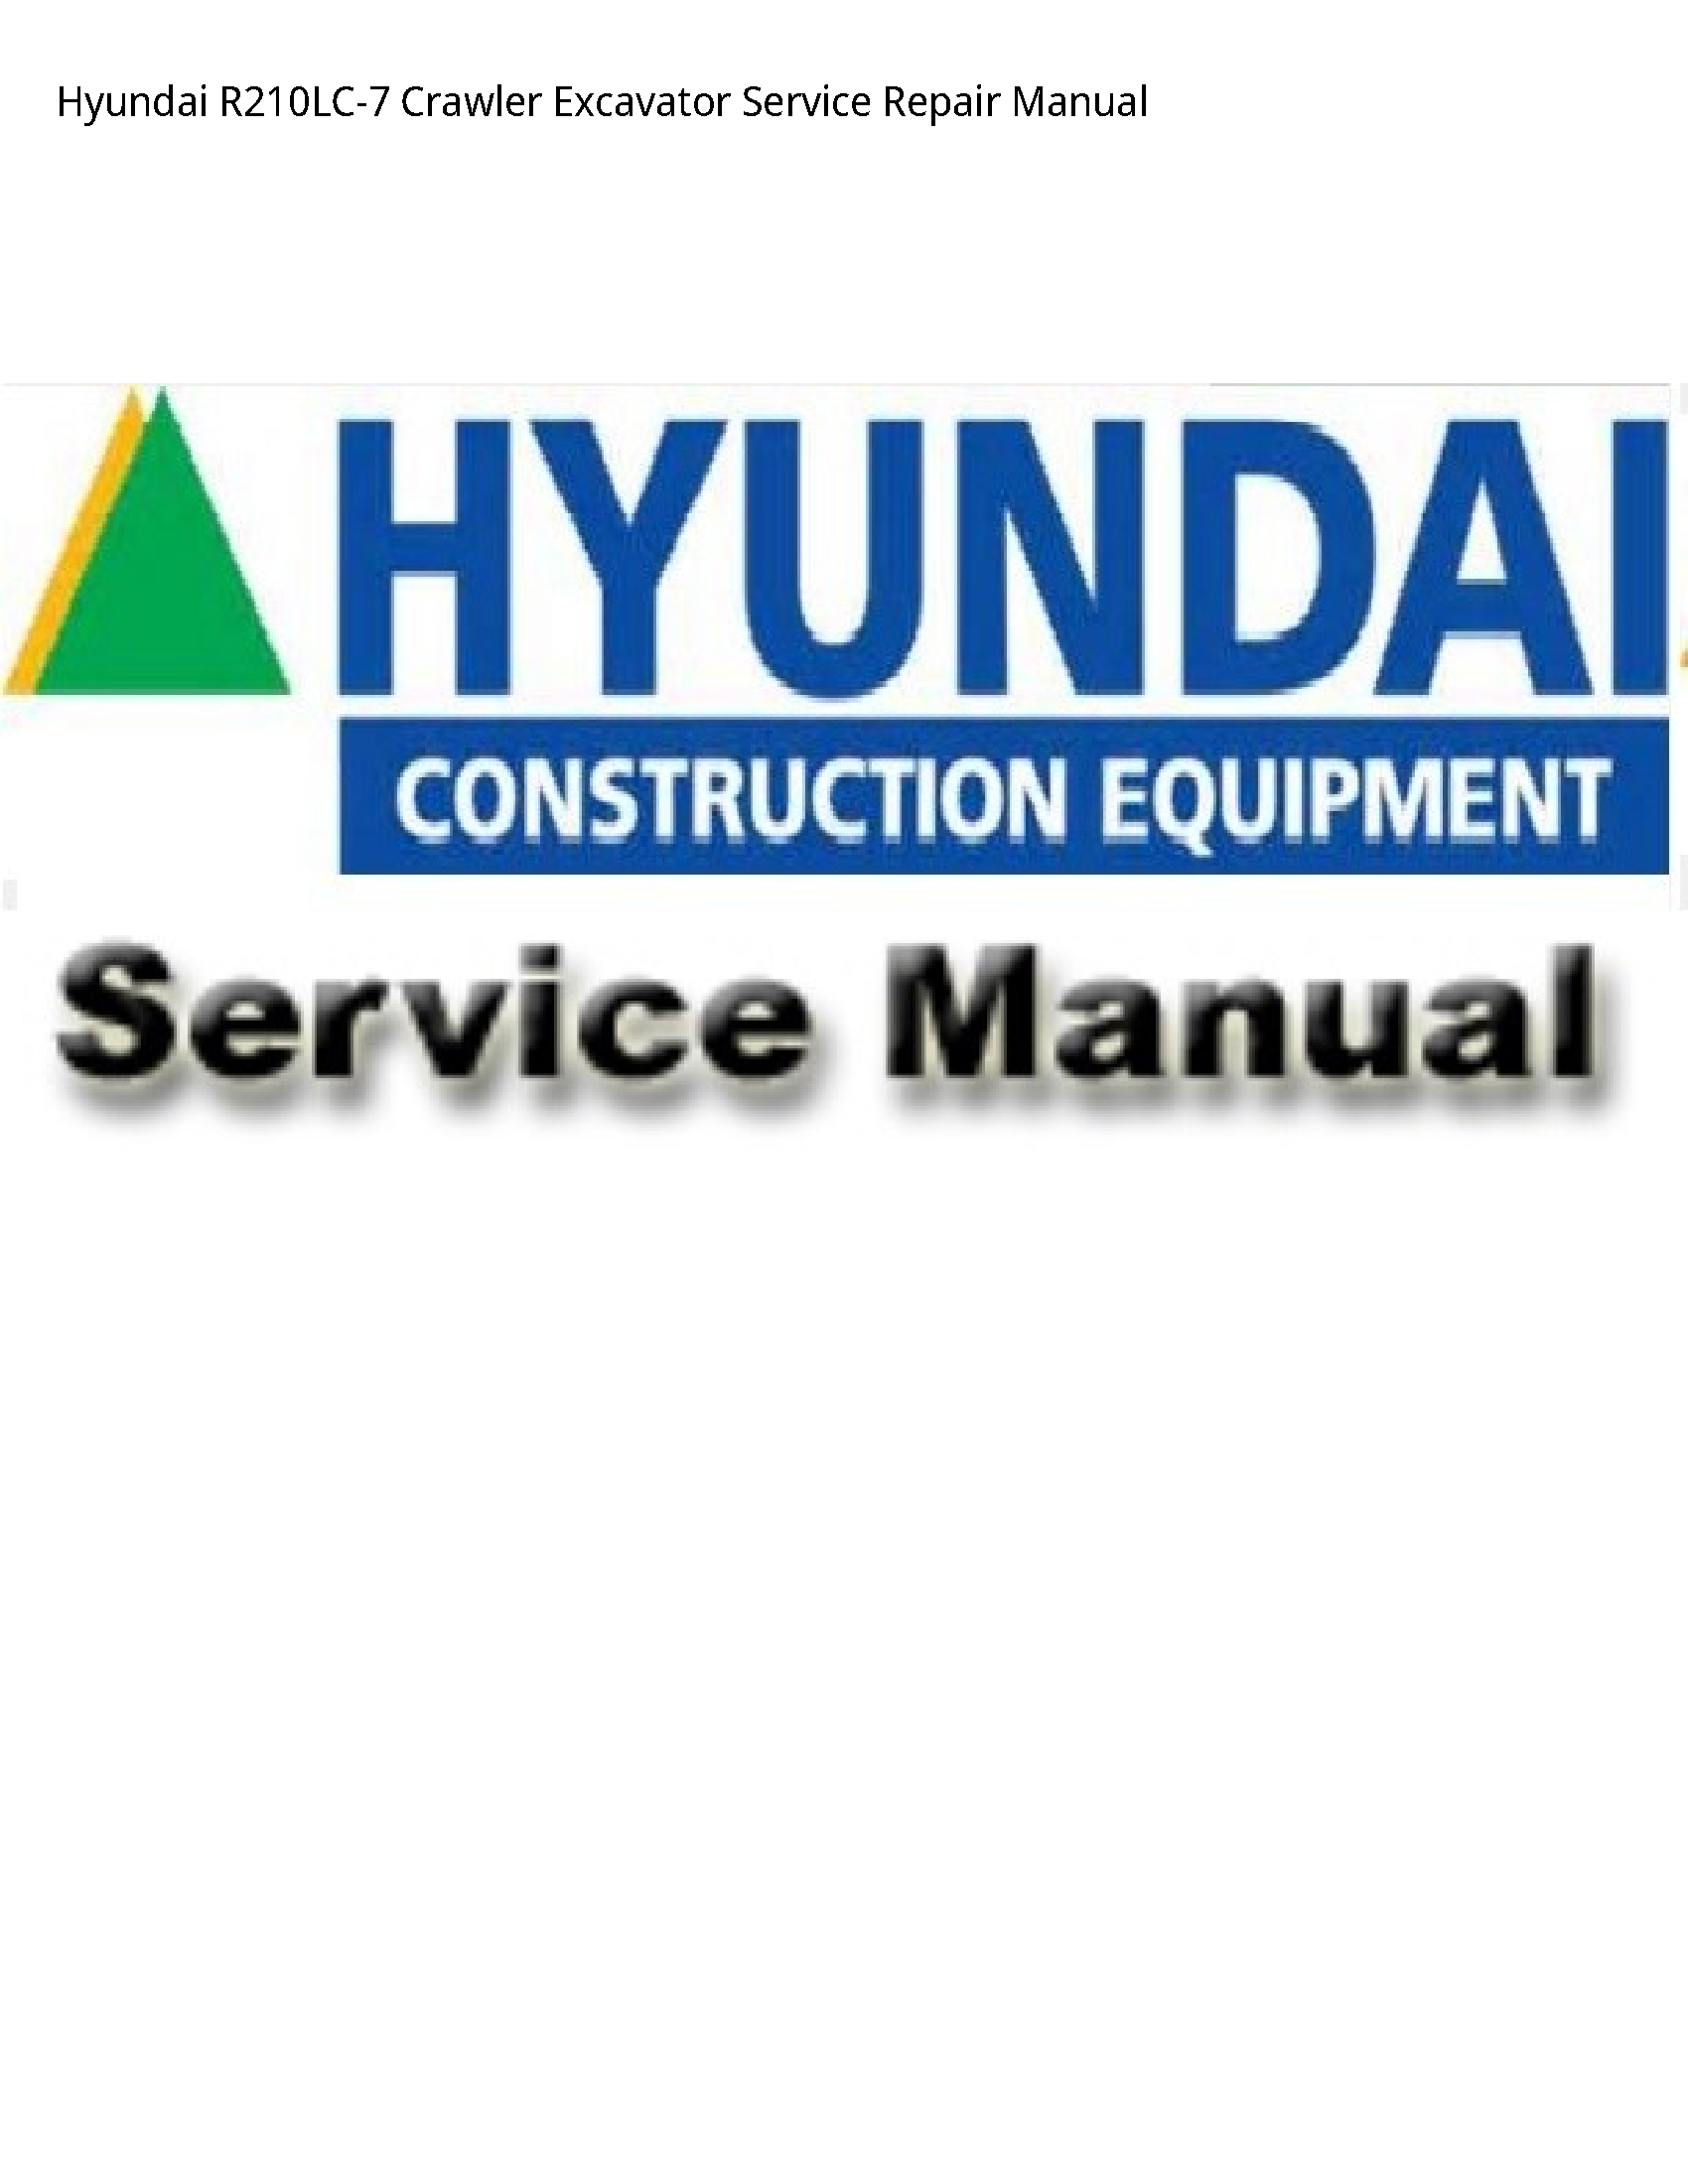 Hyundai R210LC-7 Crawler Excavator manual